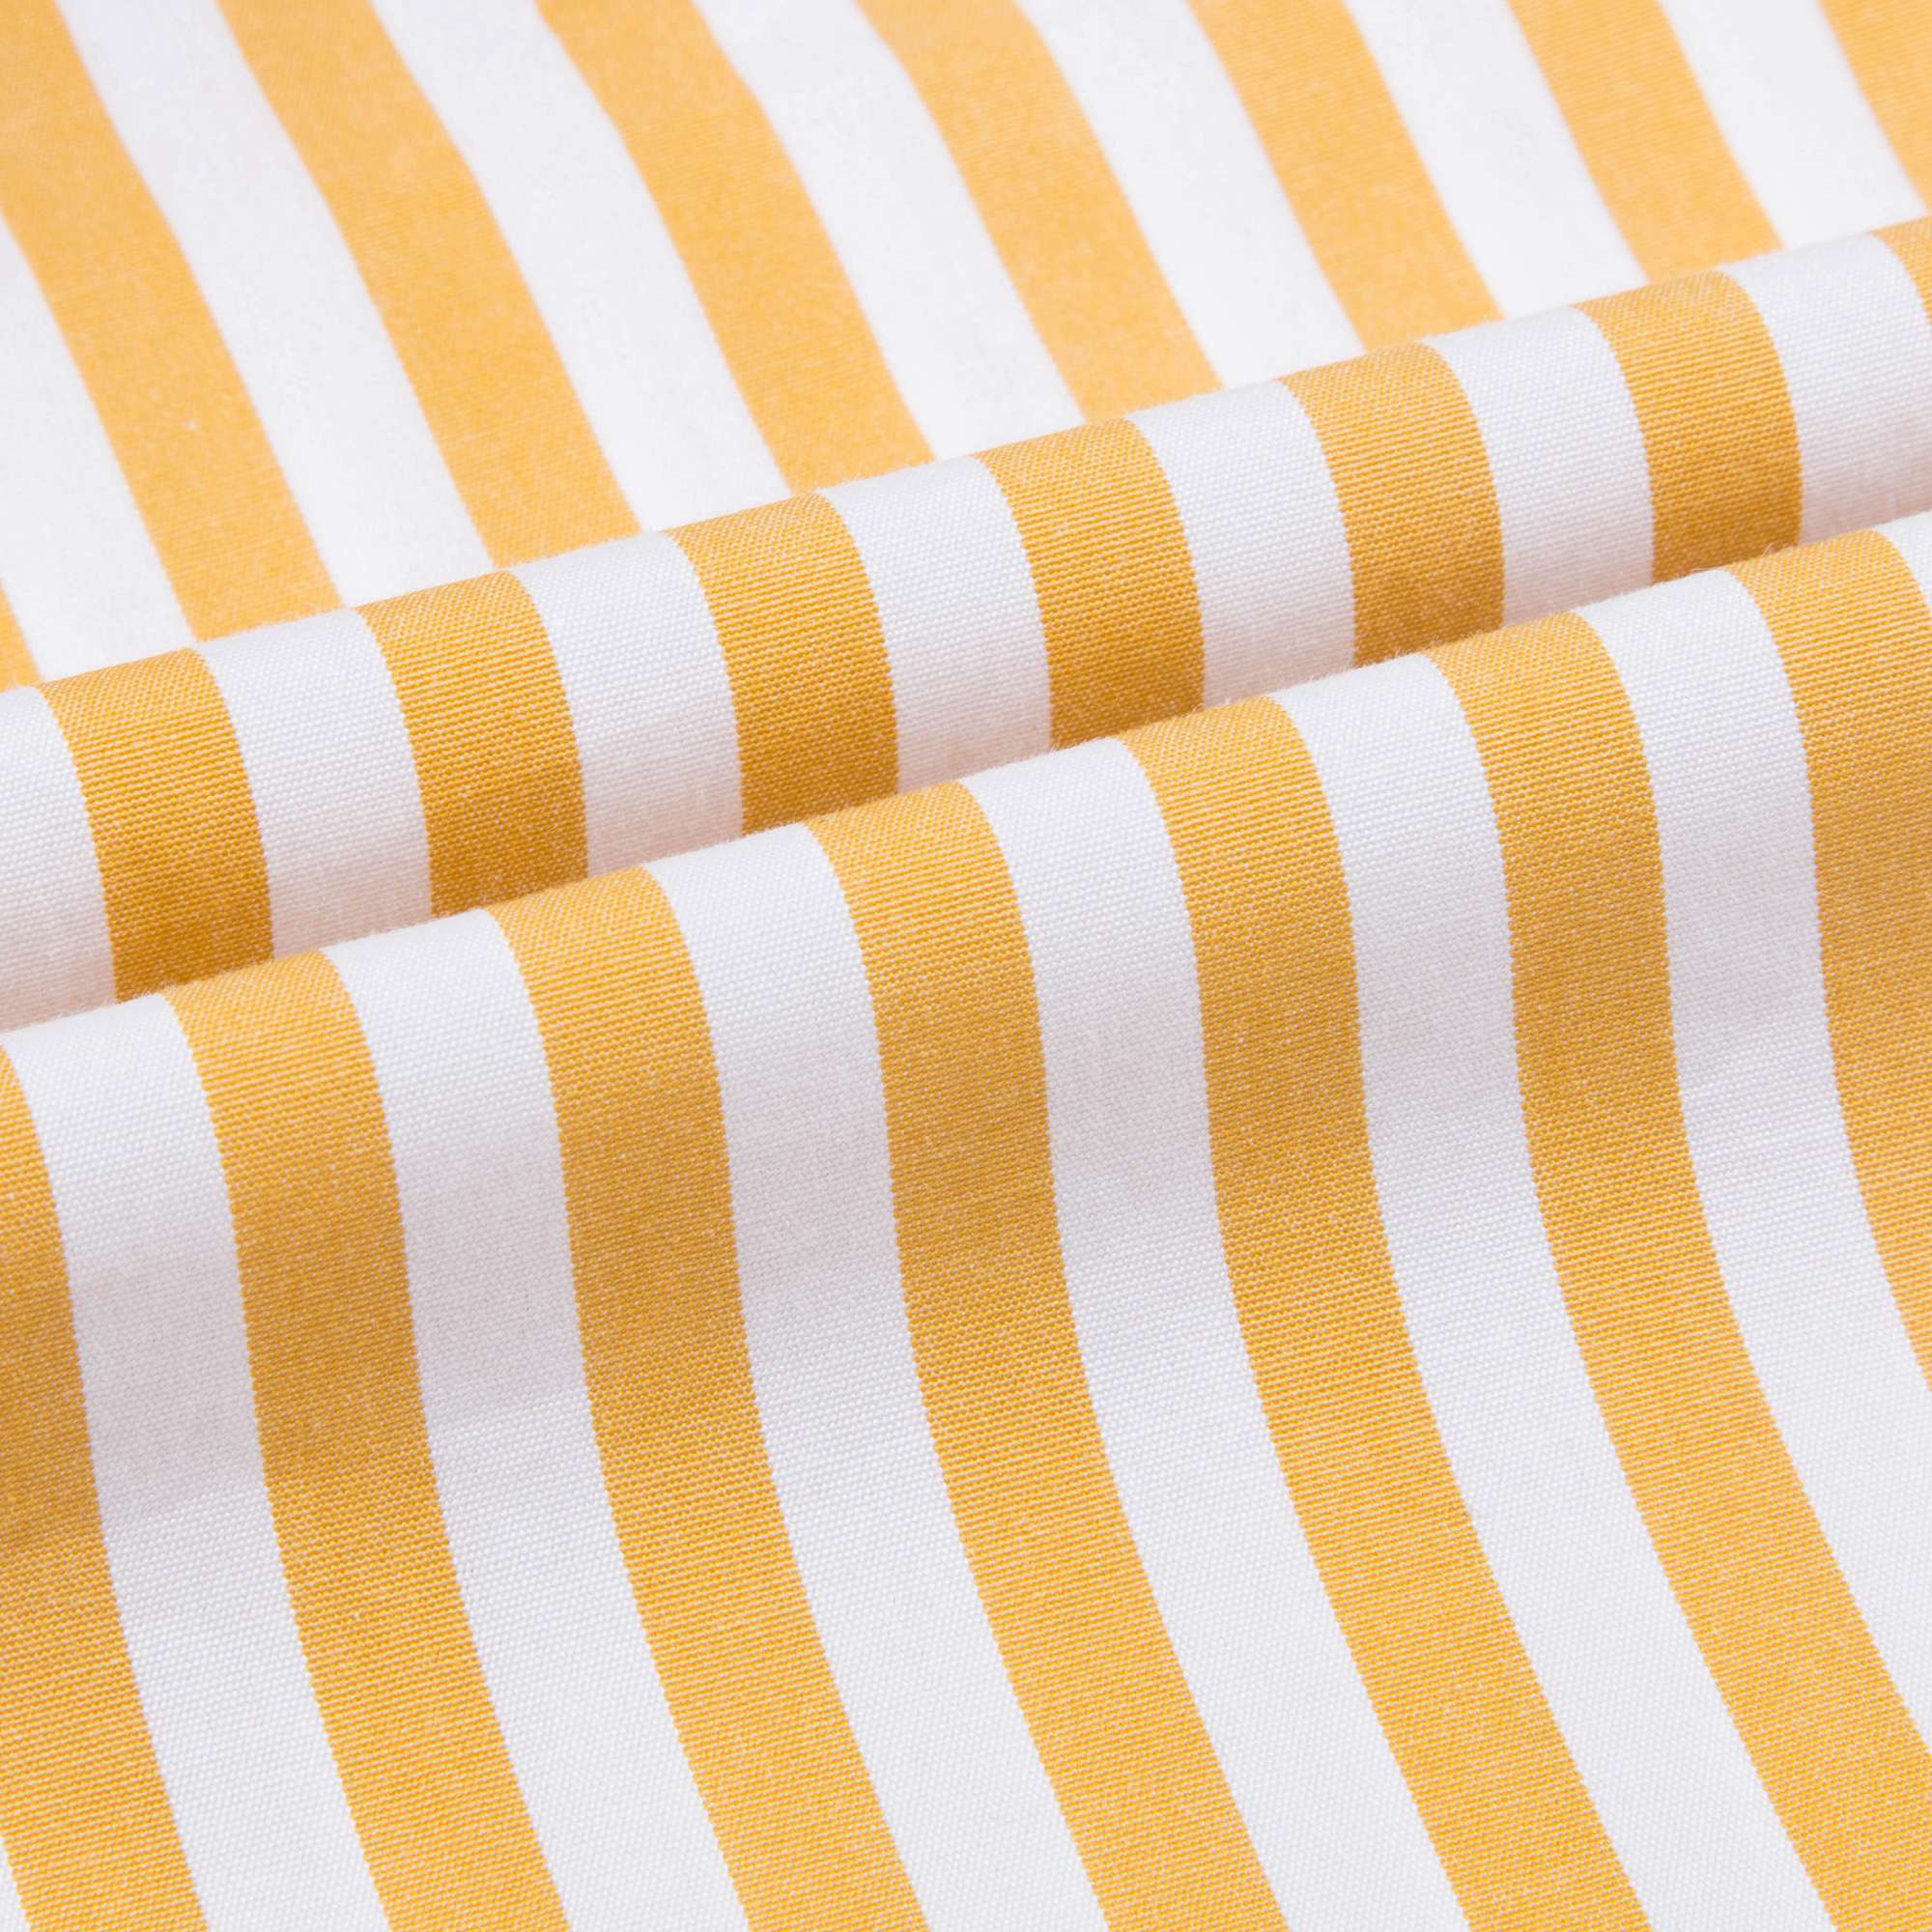 Baby Girls Yellow Stripe Cotton Woven Dress